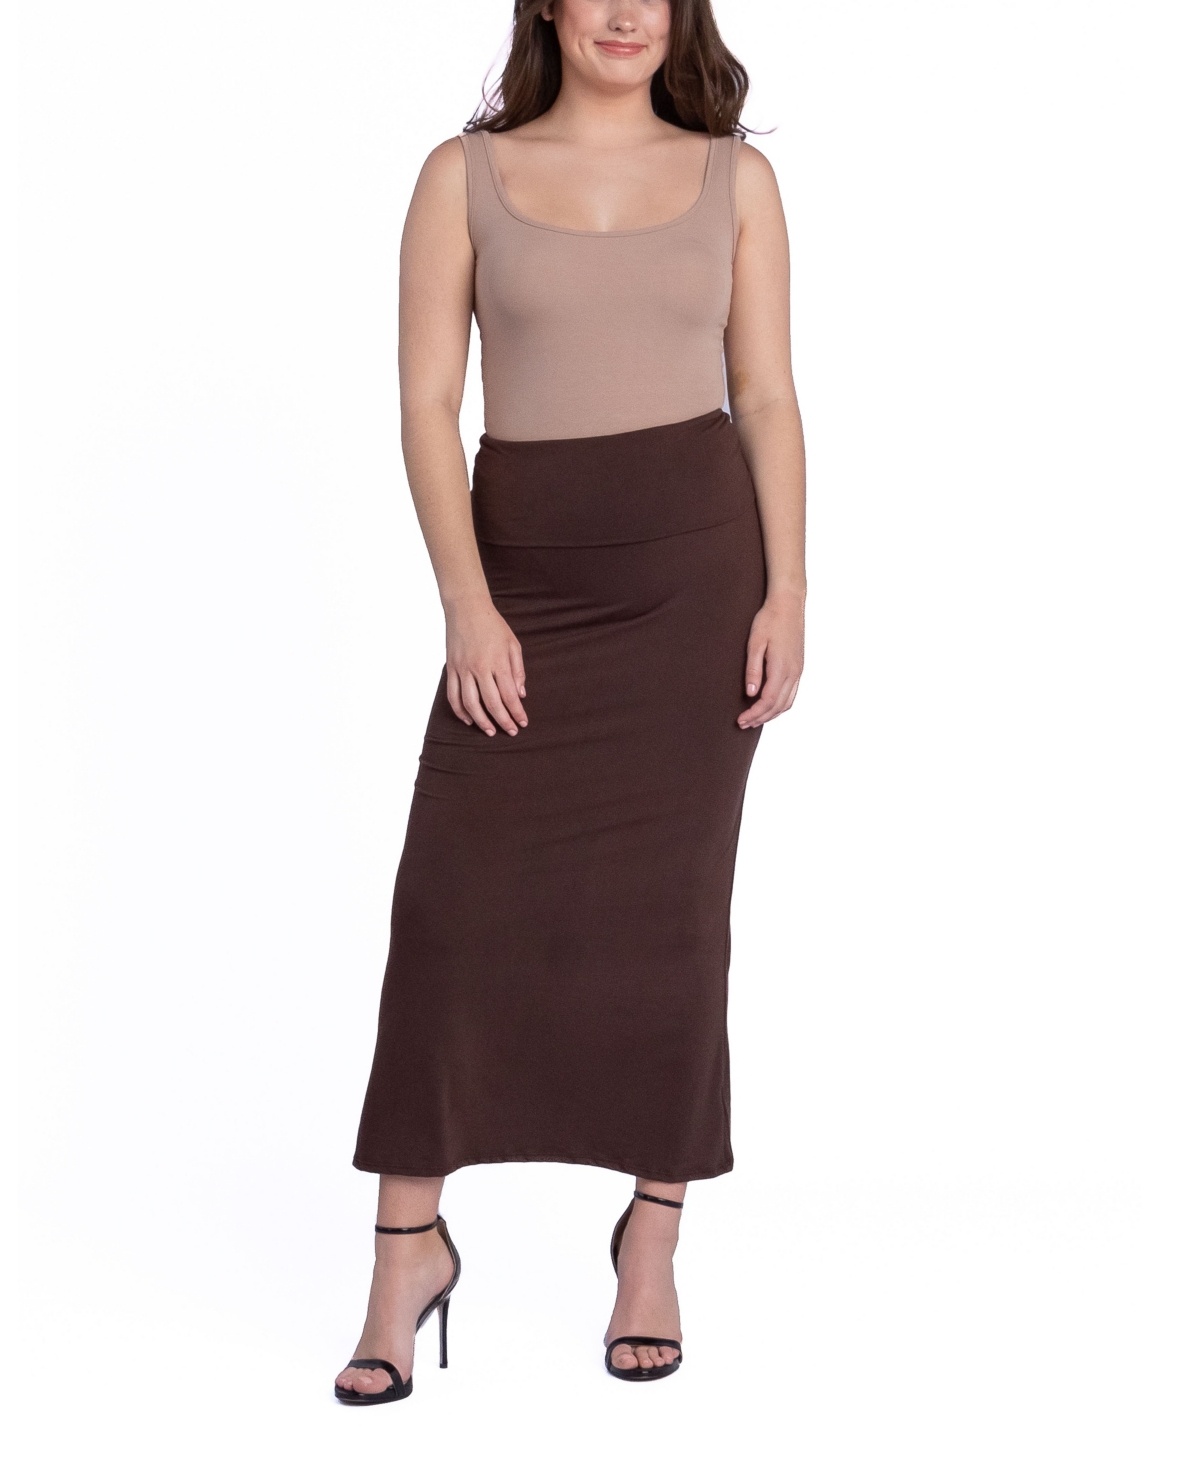 Women's Foldable Waistband Relaxing to Wear Skirt - Brown